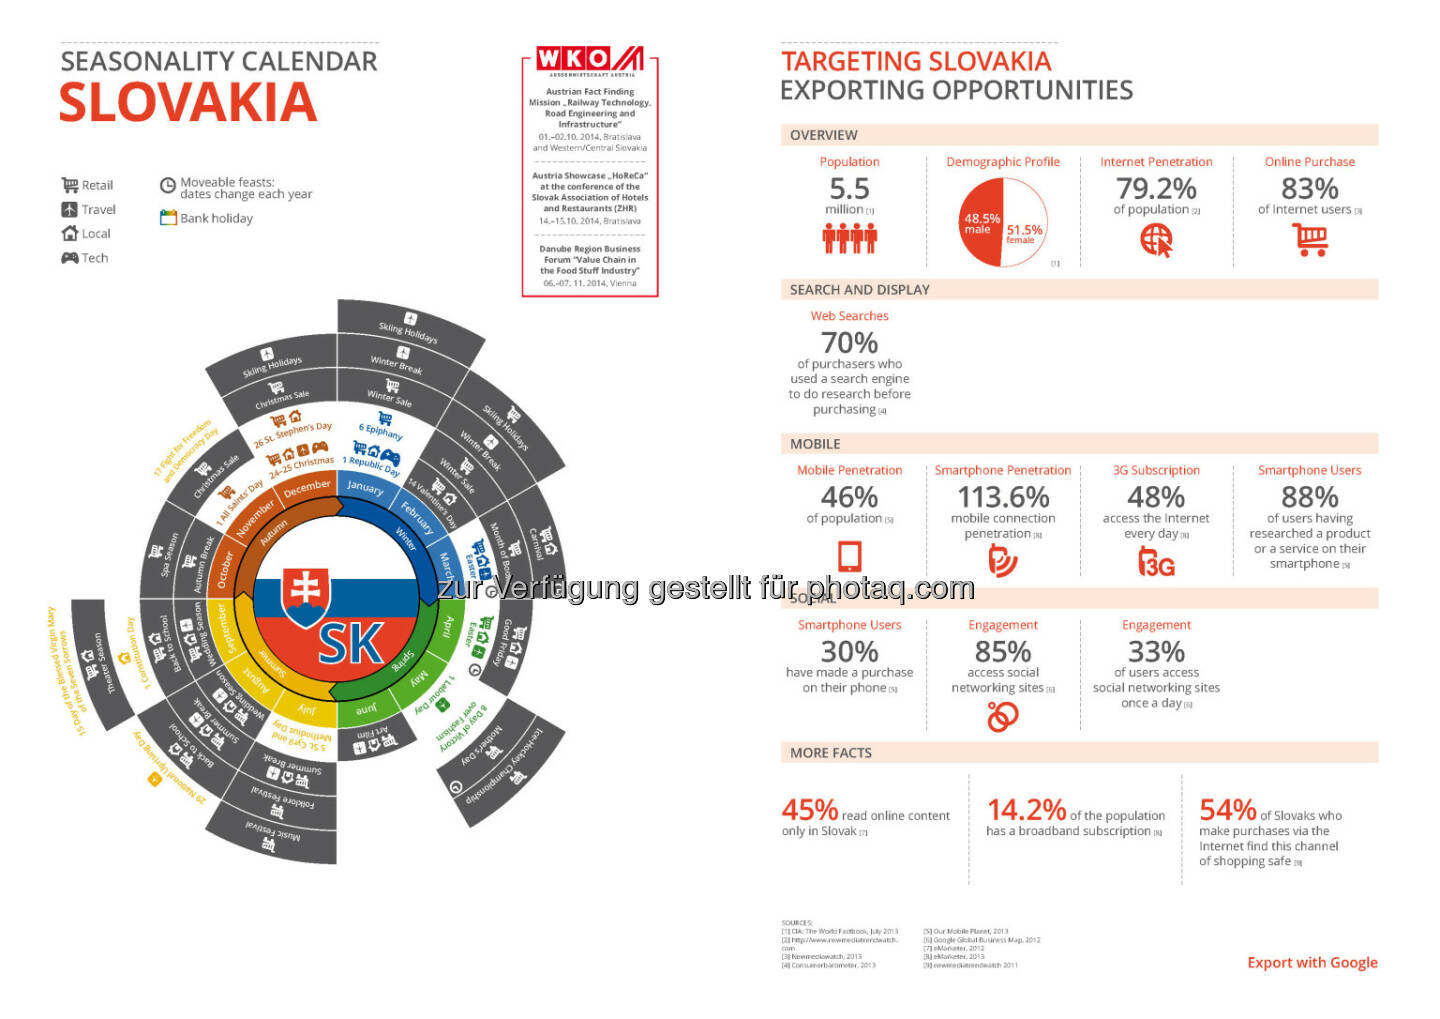 Slowakei in der Export Business Map  